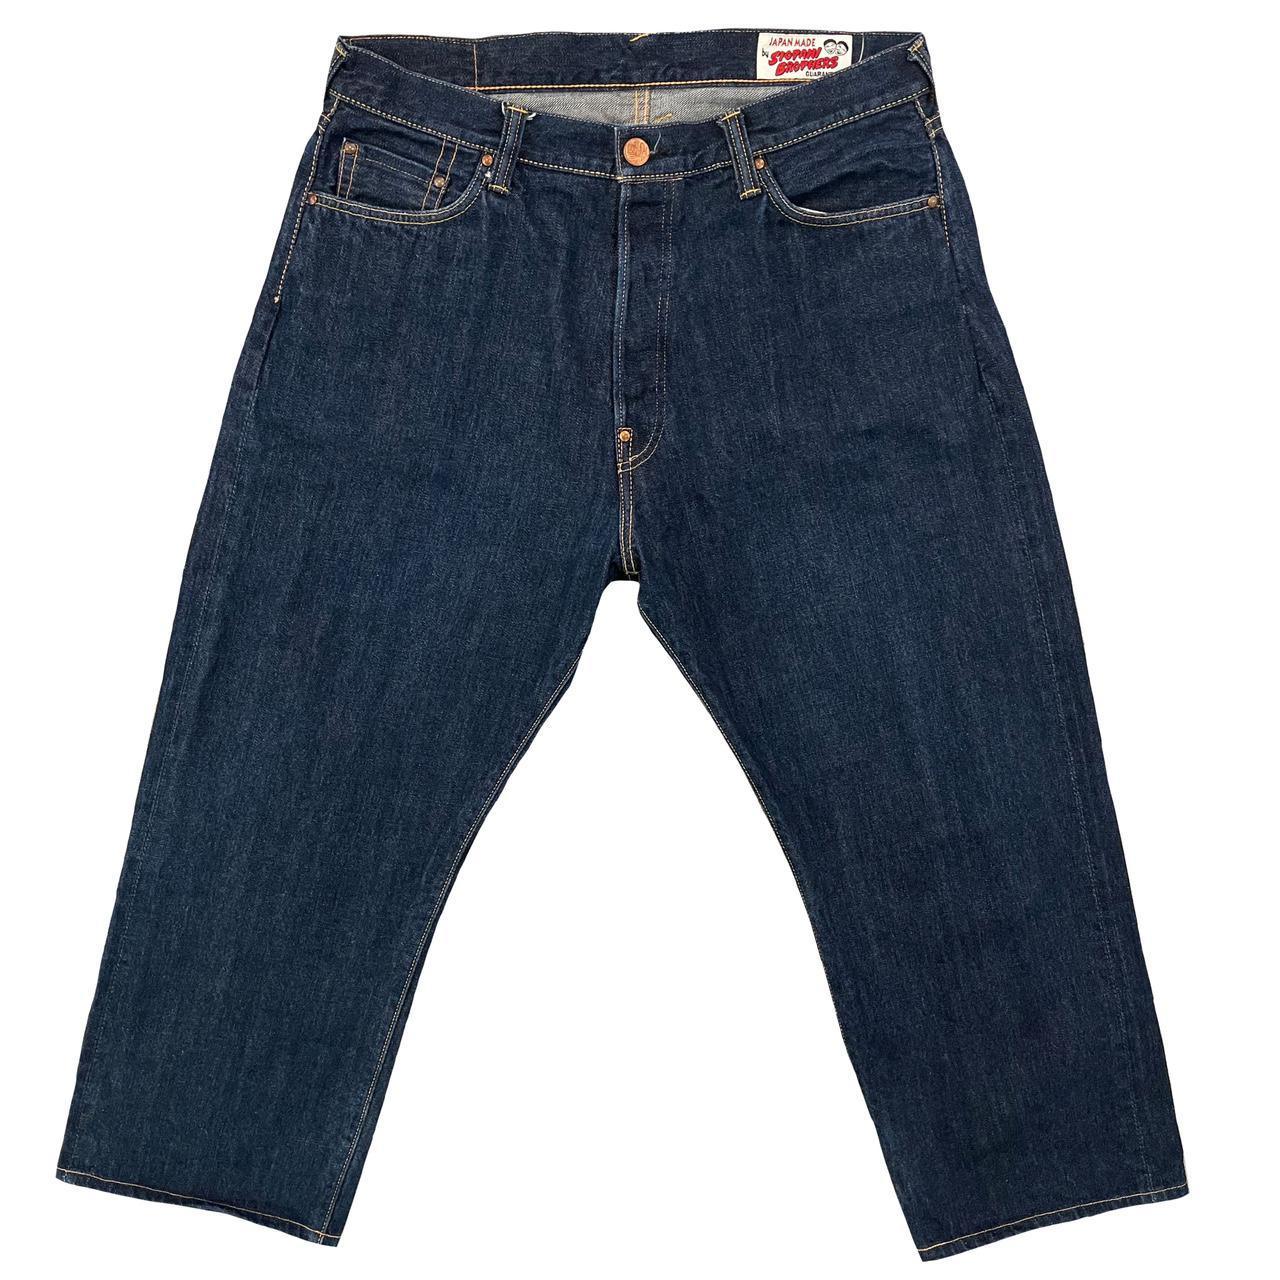 Evisu Ishigaki Camo Daicock Jeans - Known Source